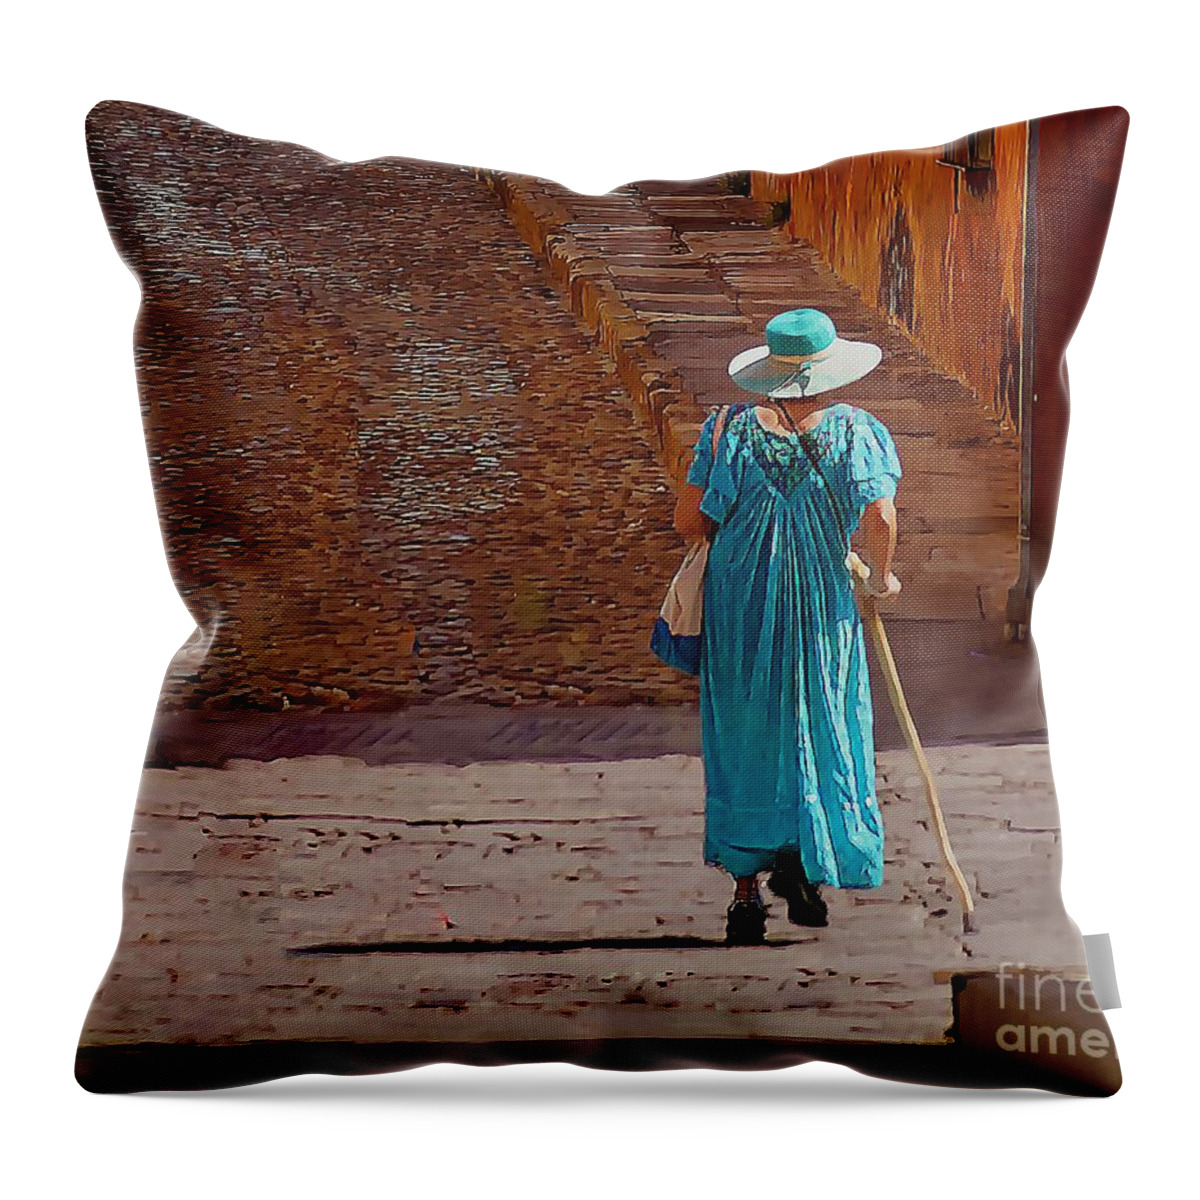 John+kolenberg Throw Pillow featuring the photograph A Woman Walking Home by John Kolenberg